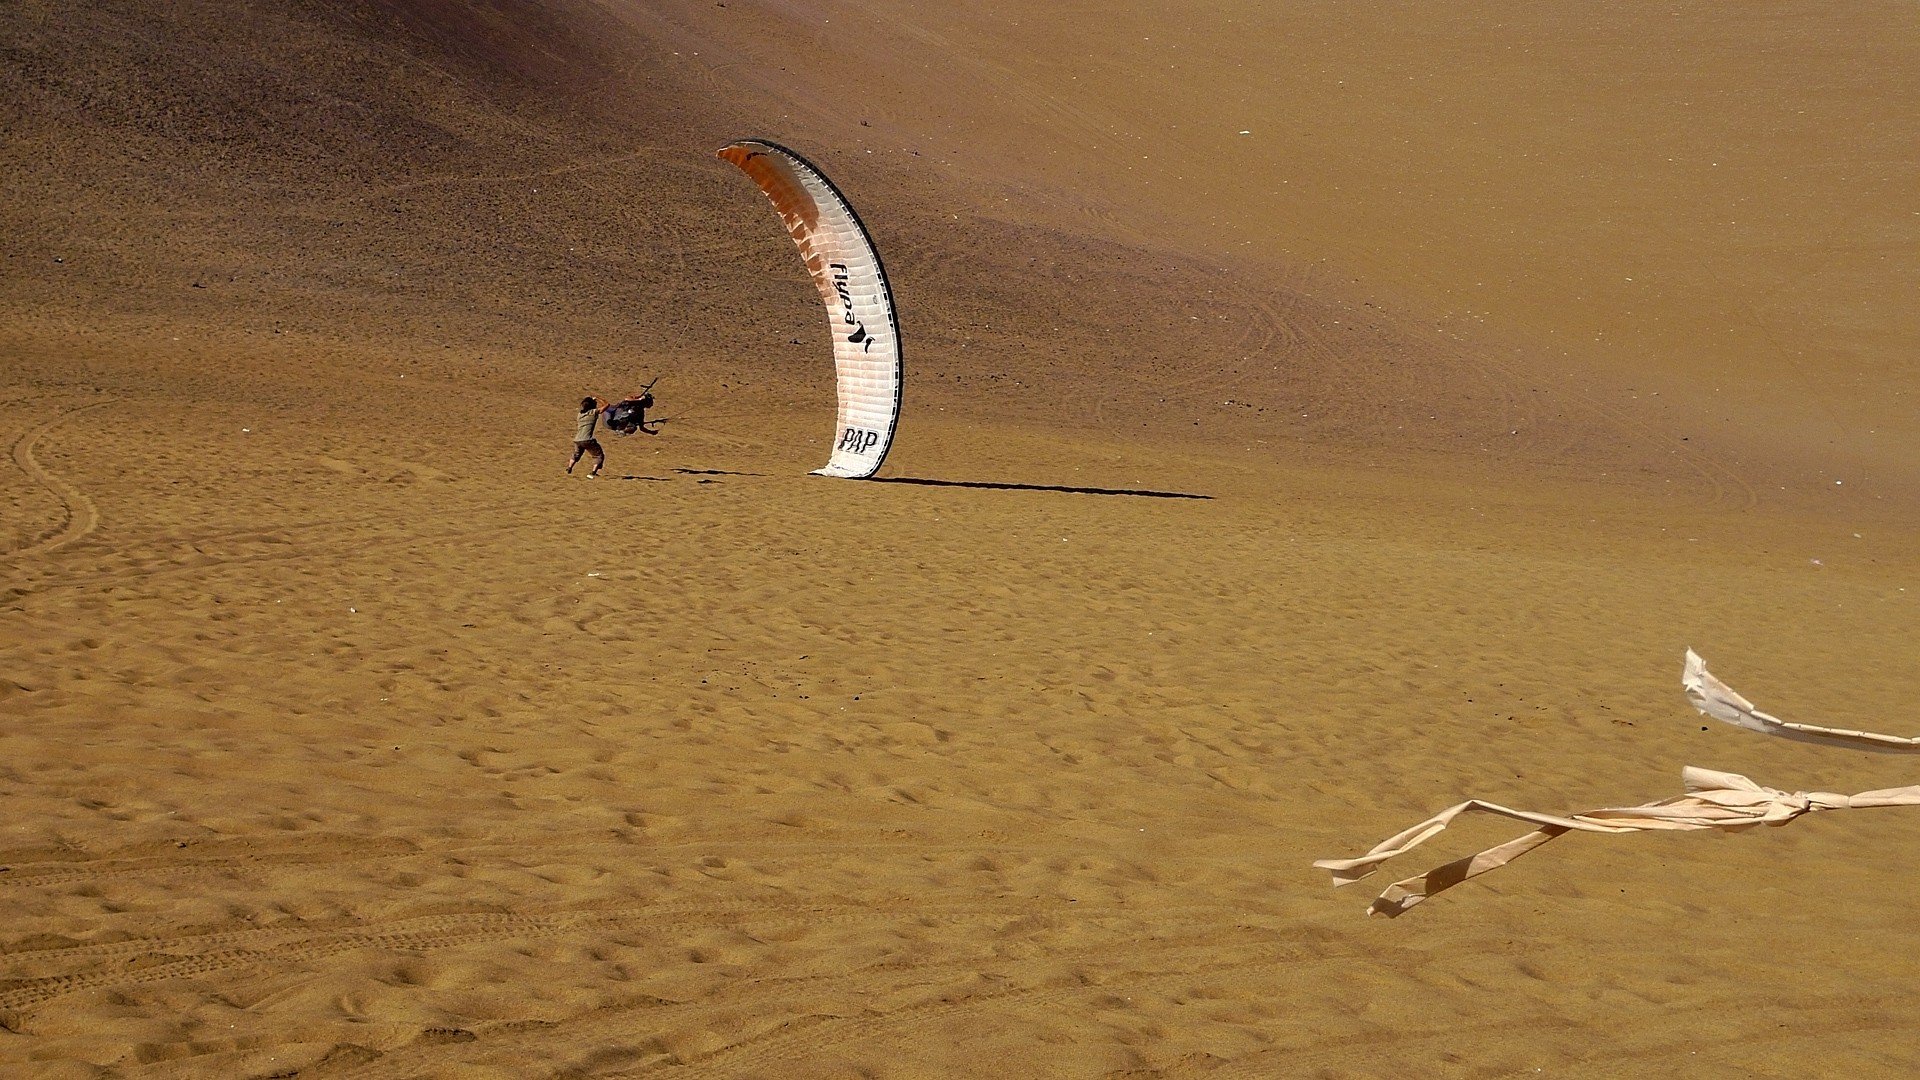 sand, Deserts, Sports, Spiral, Ground, Paragliders, Paragliding, Gliding, Iquique, Risk, Sport, Mathieu, Rouanet Wallpaper